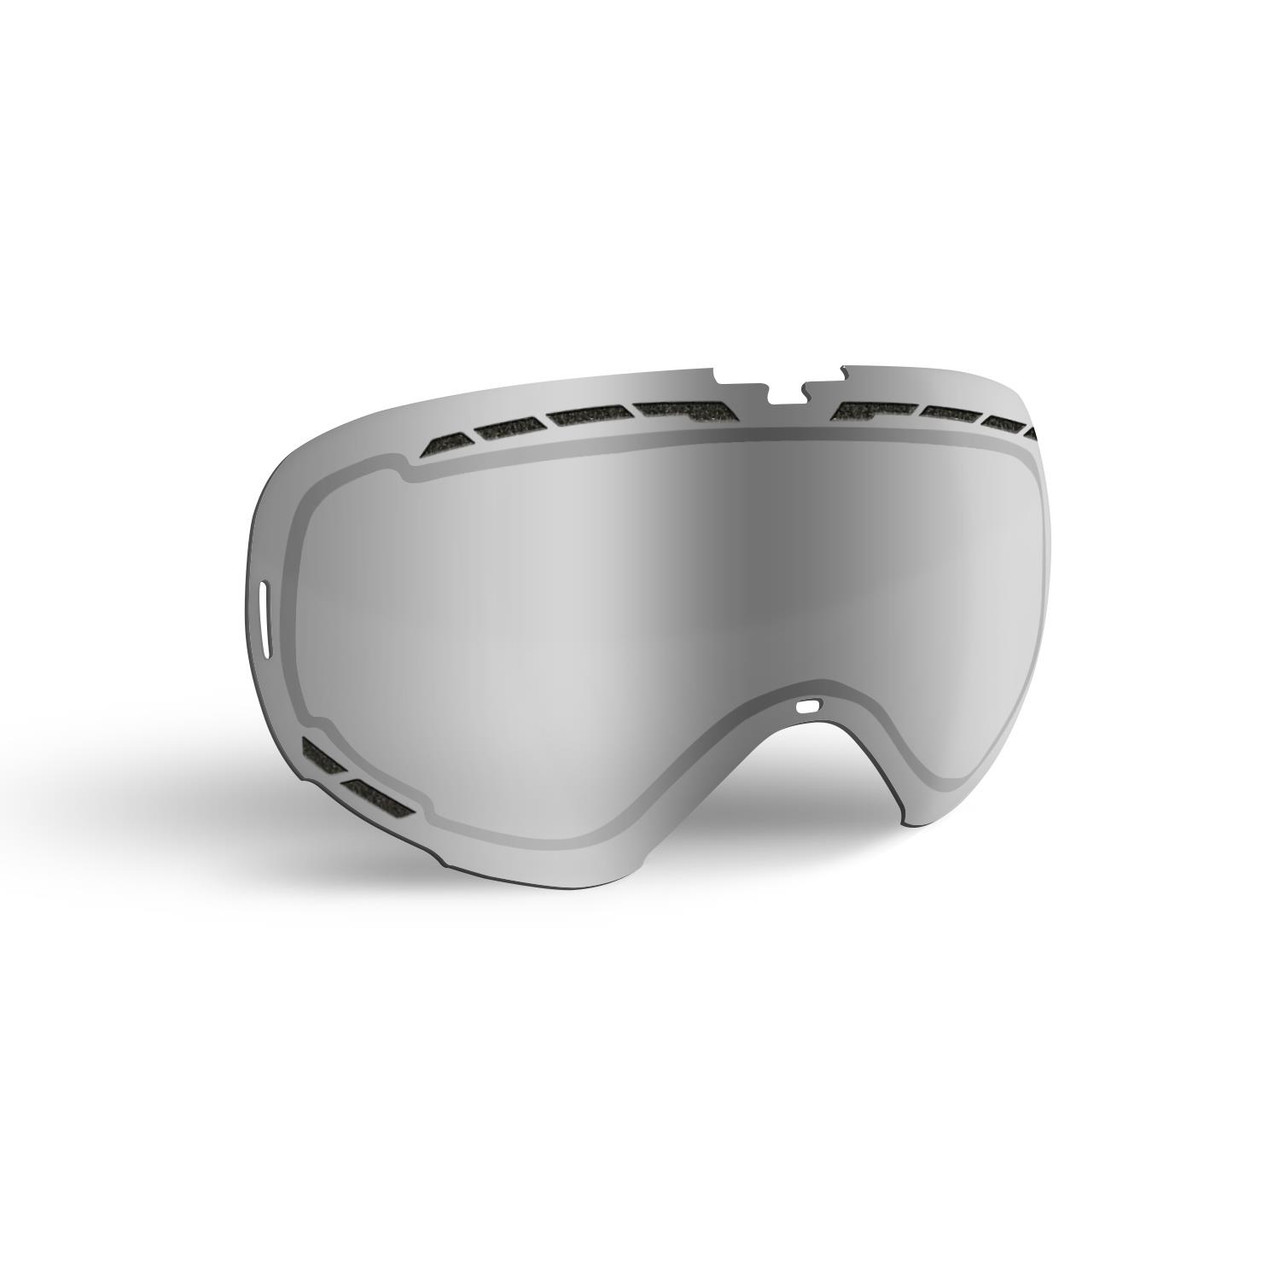 Polaris New OEM 509® Revolver Goggles Polarized Replacement Goggle Lens, 2868545